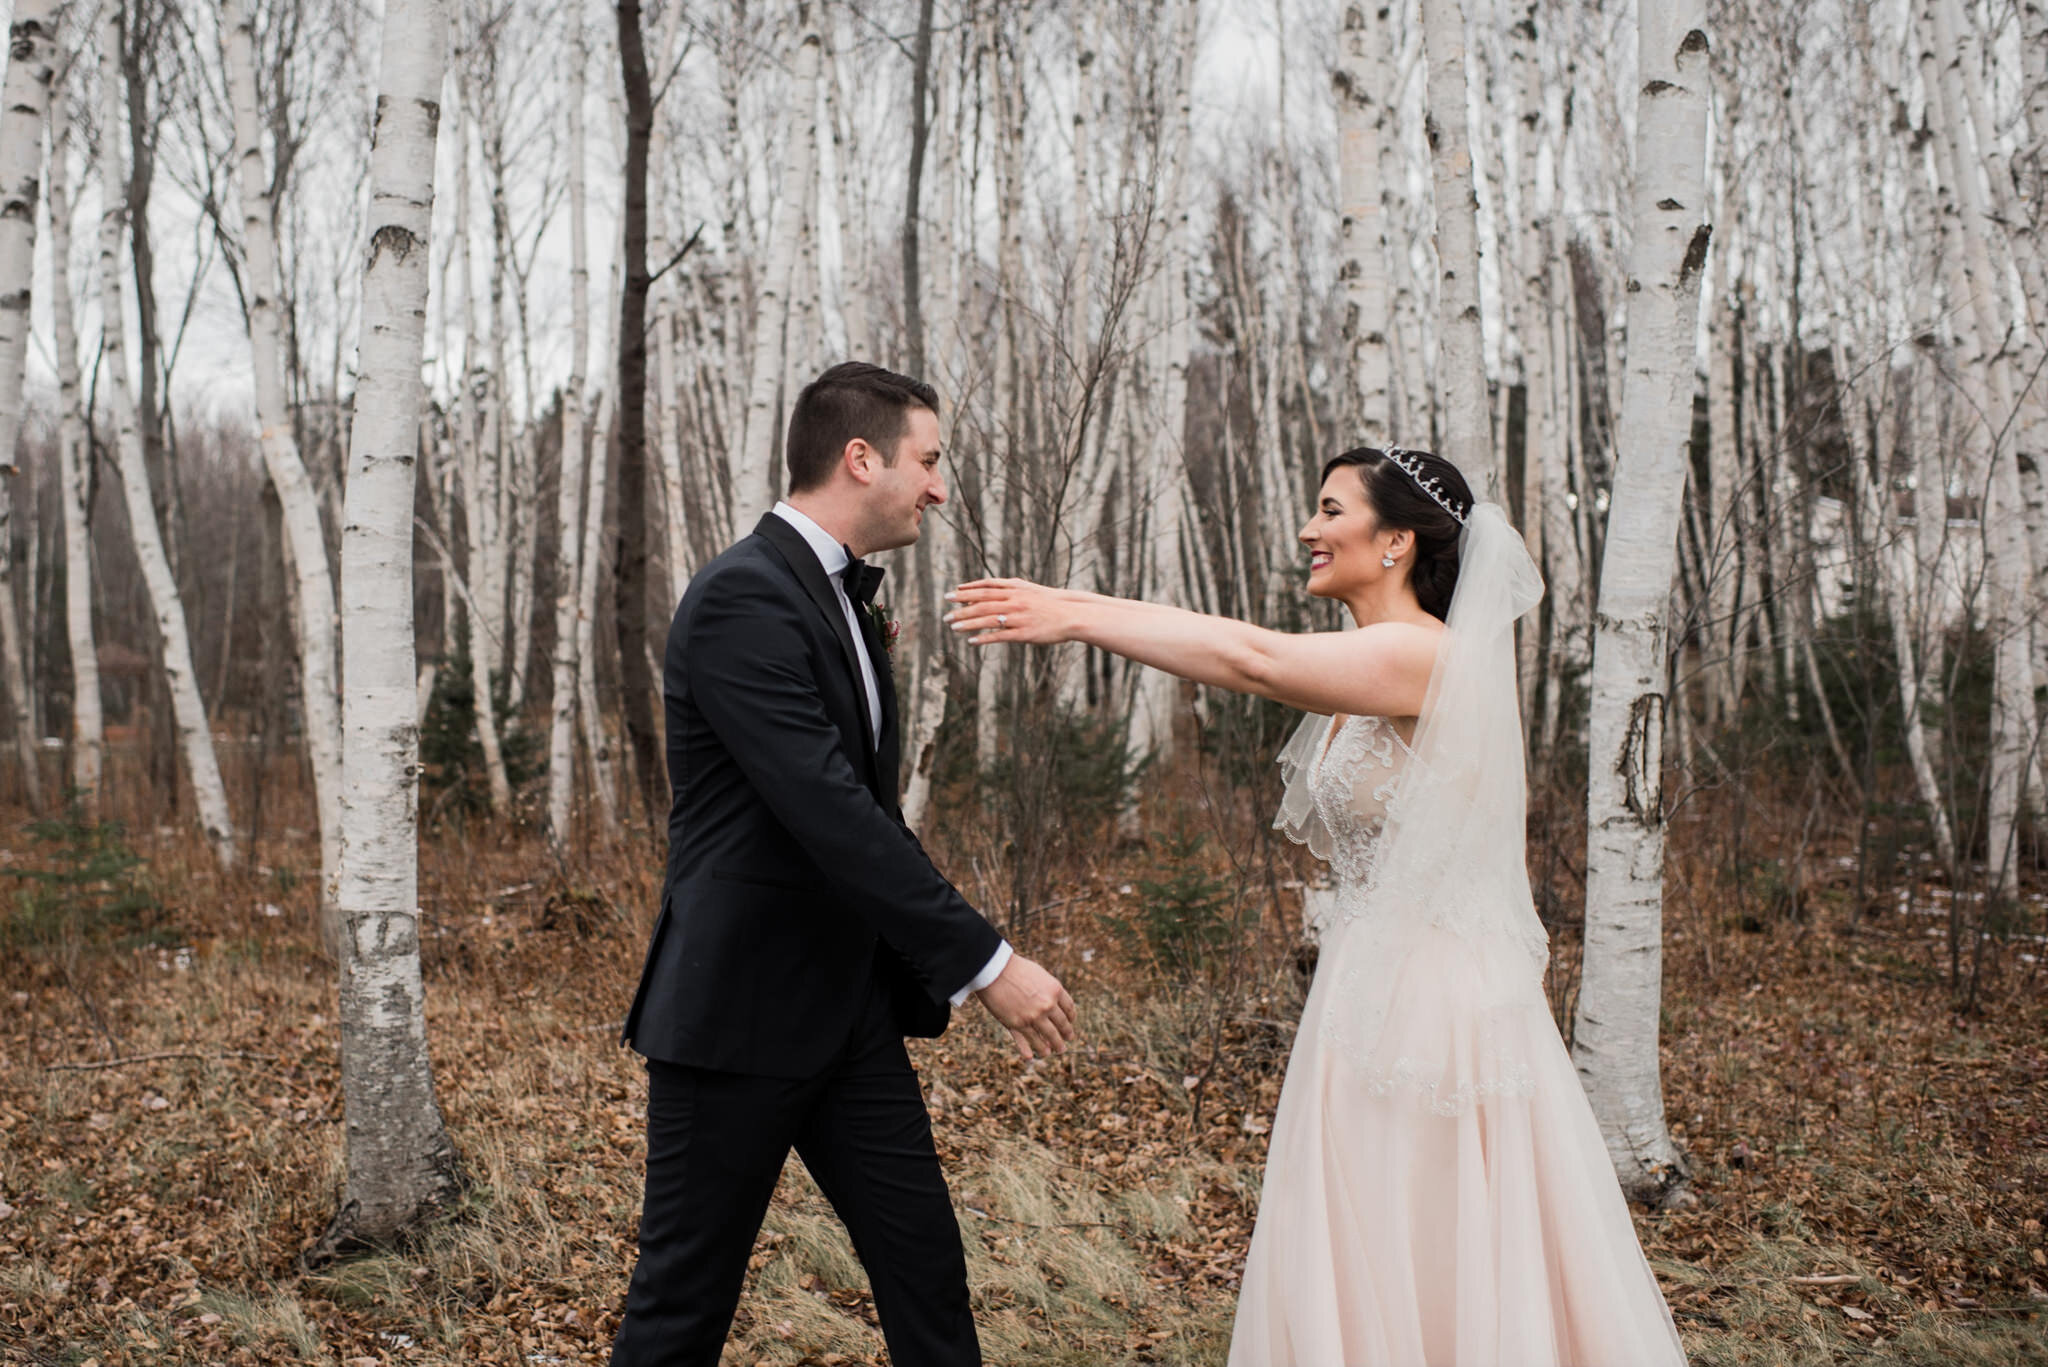 320-first-look-bride-groom-winter-birch-trees-wedding-photographer-toronto-ontario.jpg